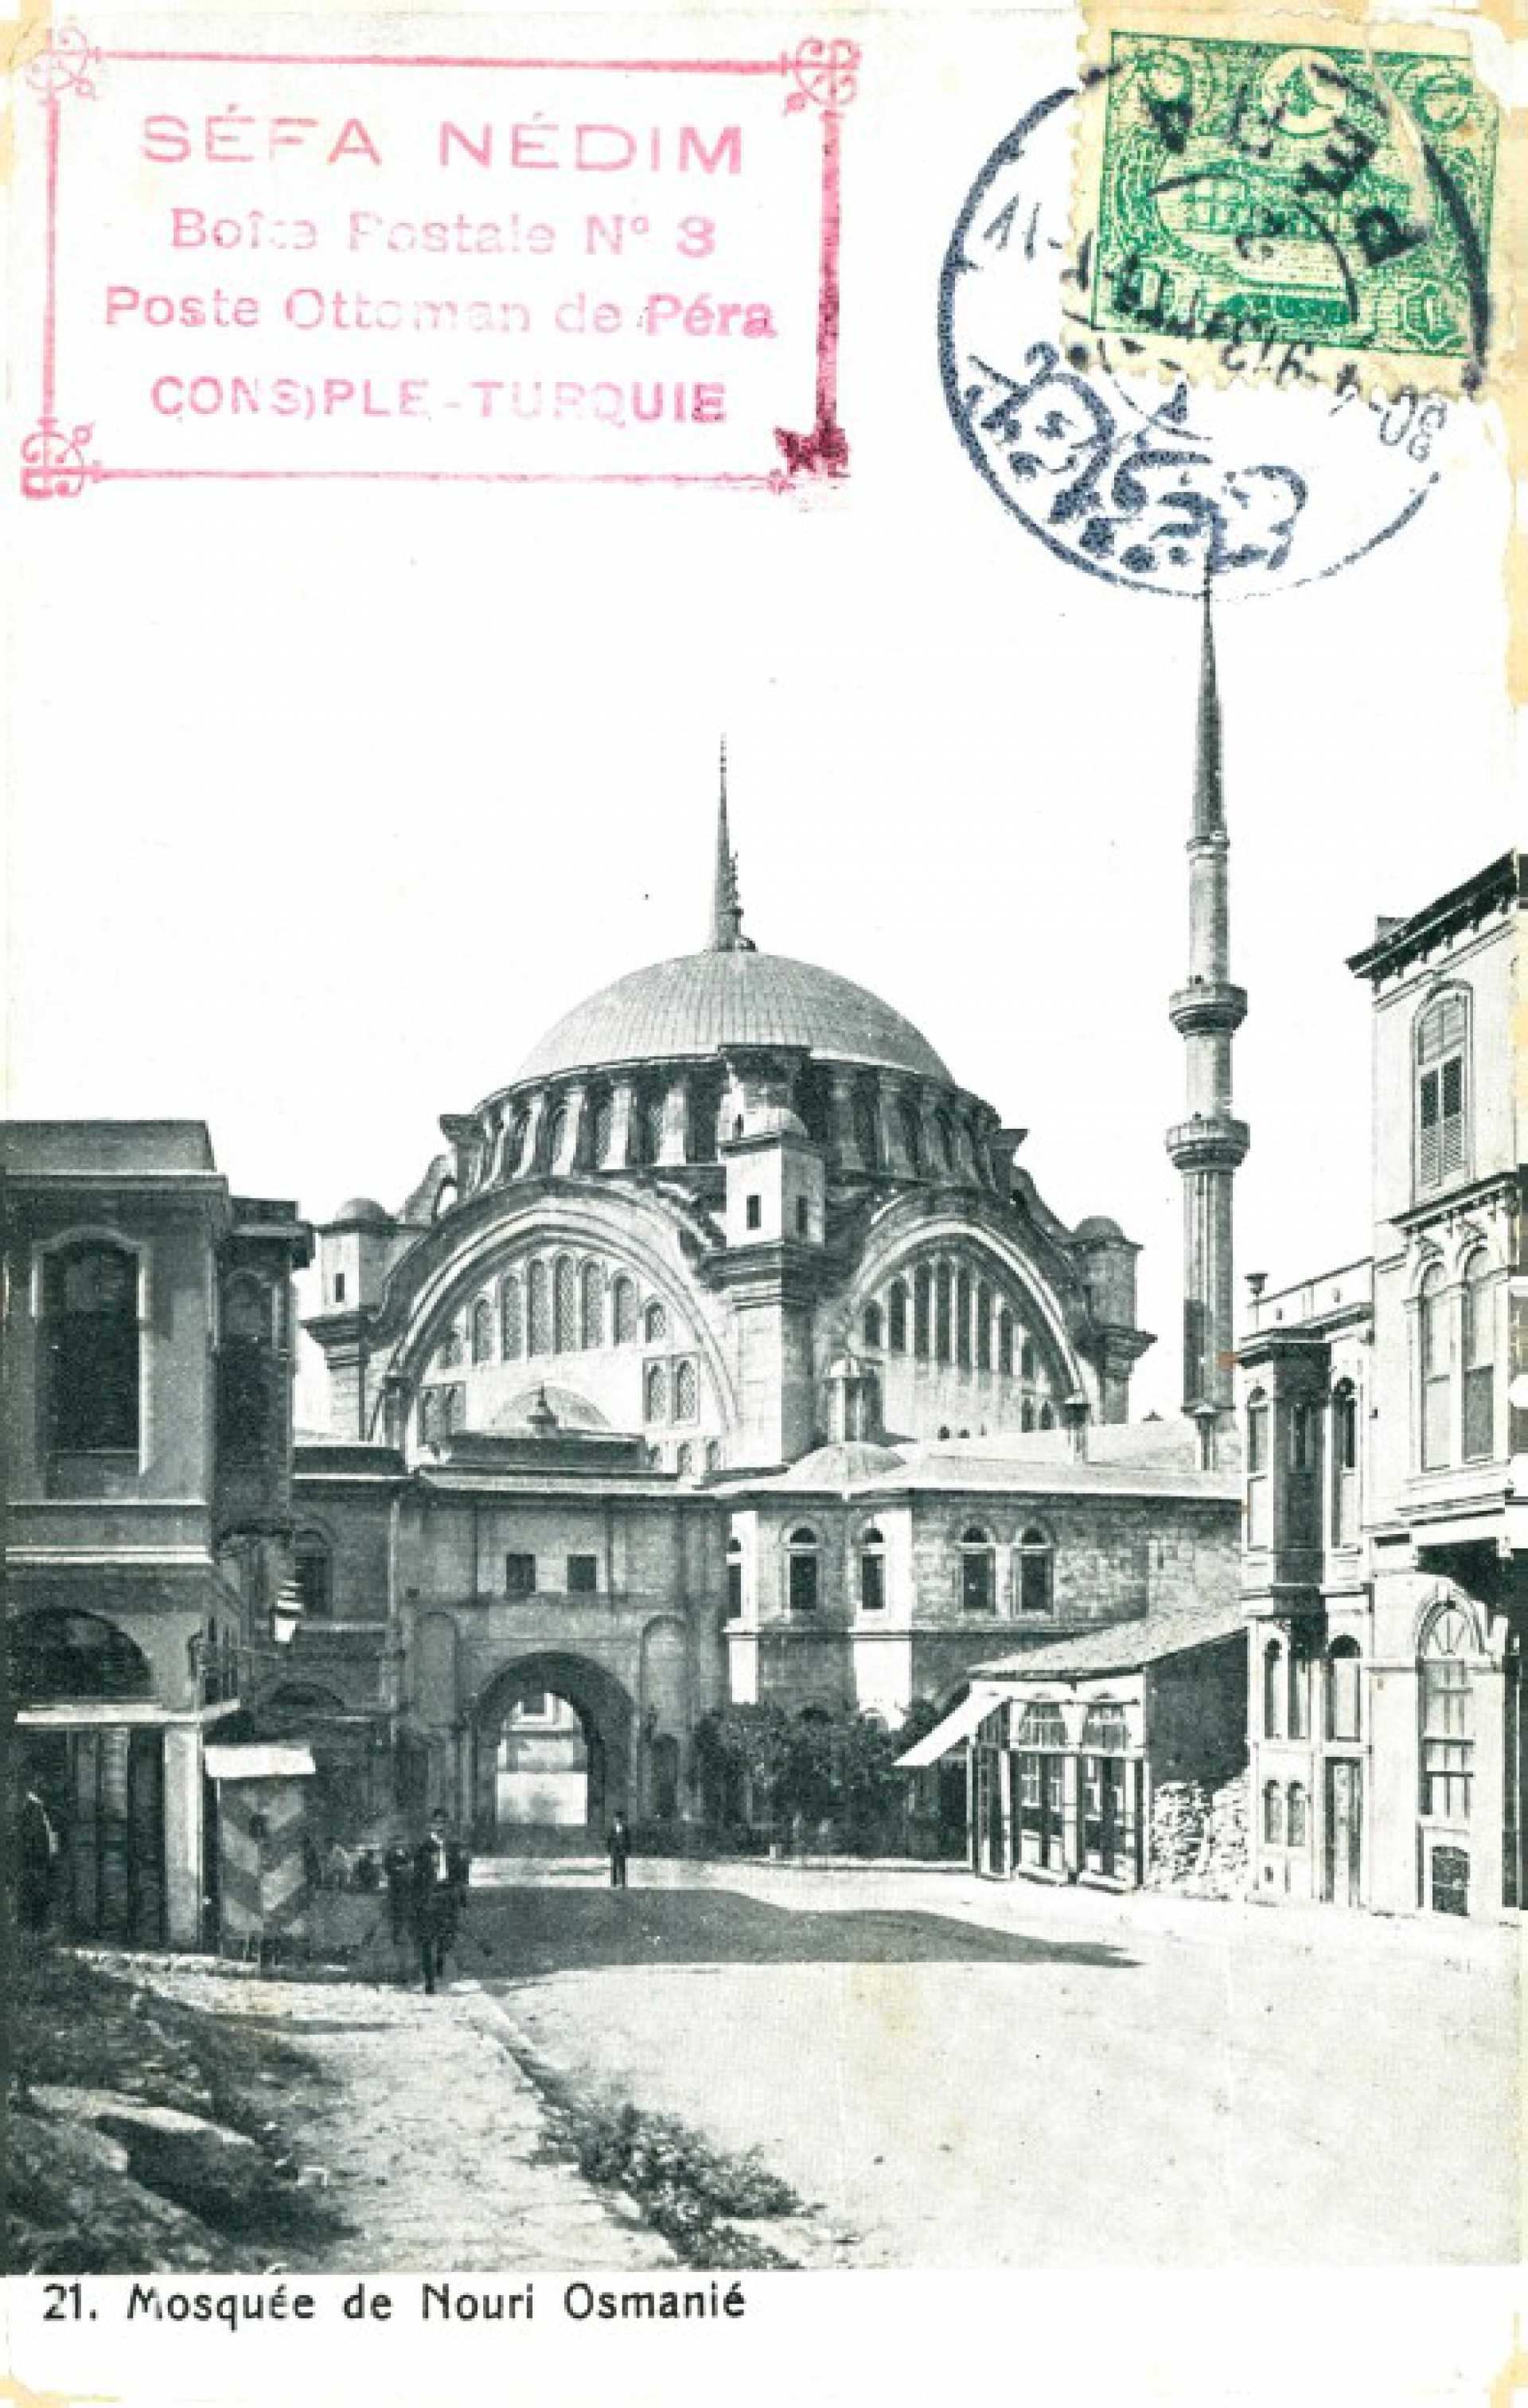 Mosquee de Nouri Osmanie